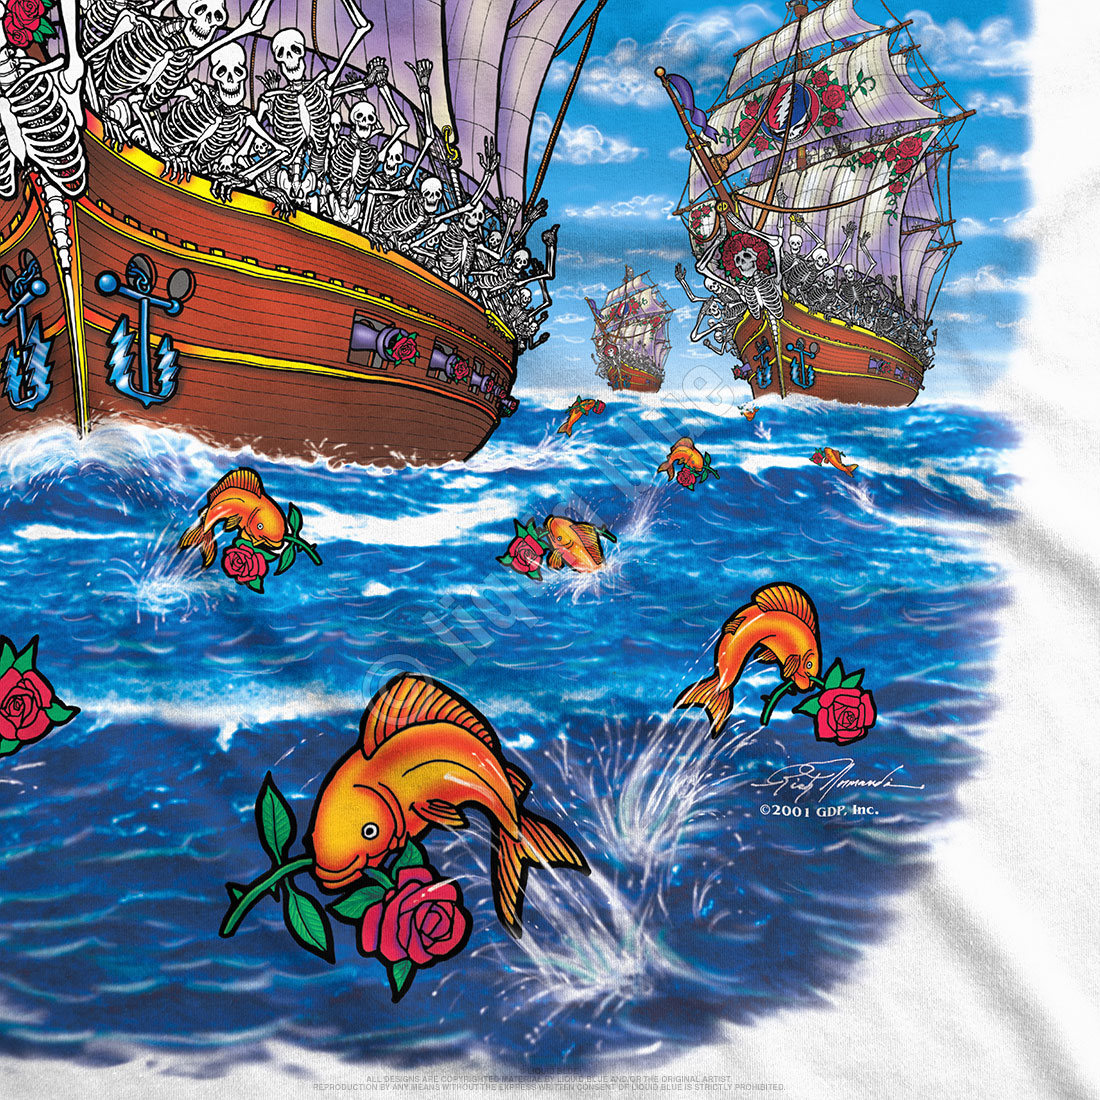 Grateful Dead Ship of Fools Tie Dye T-Shirt